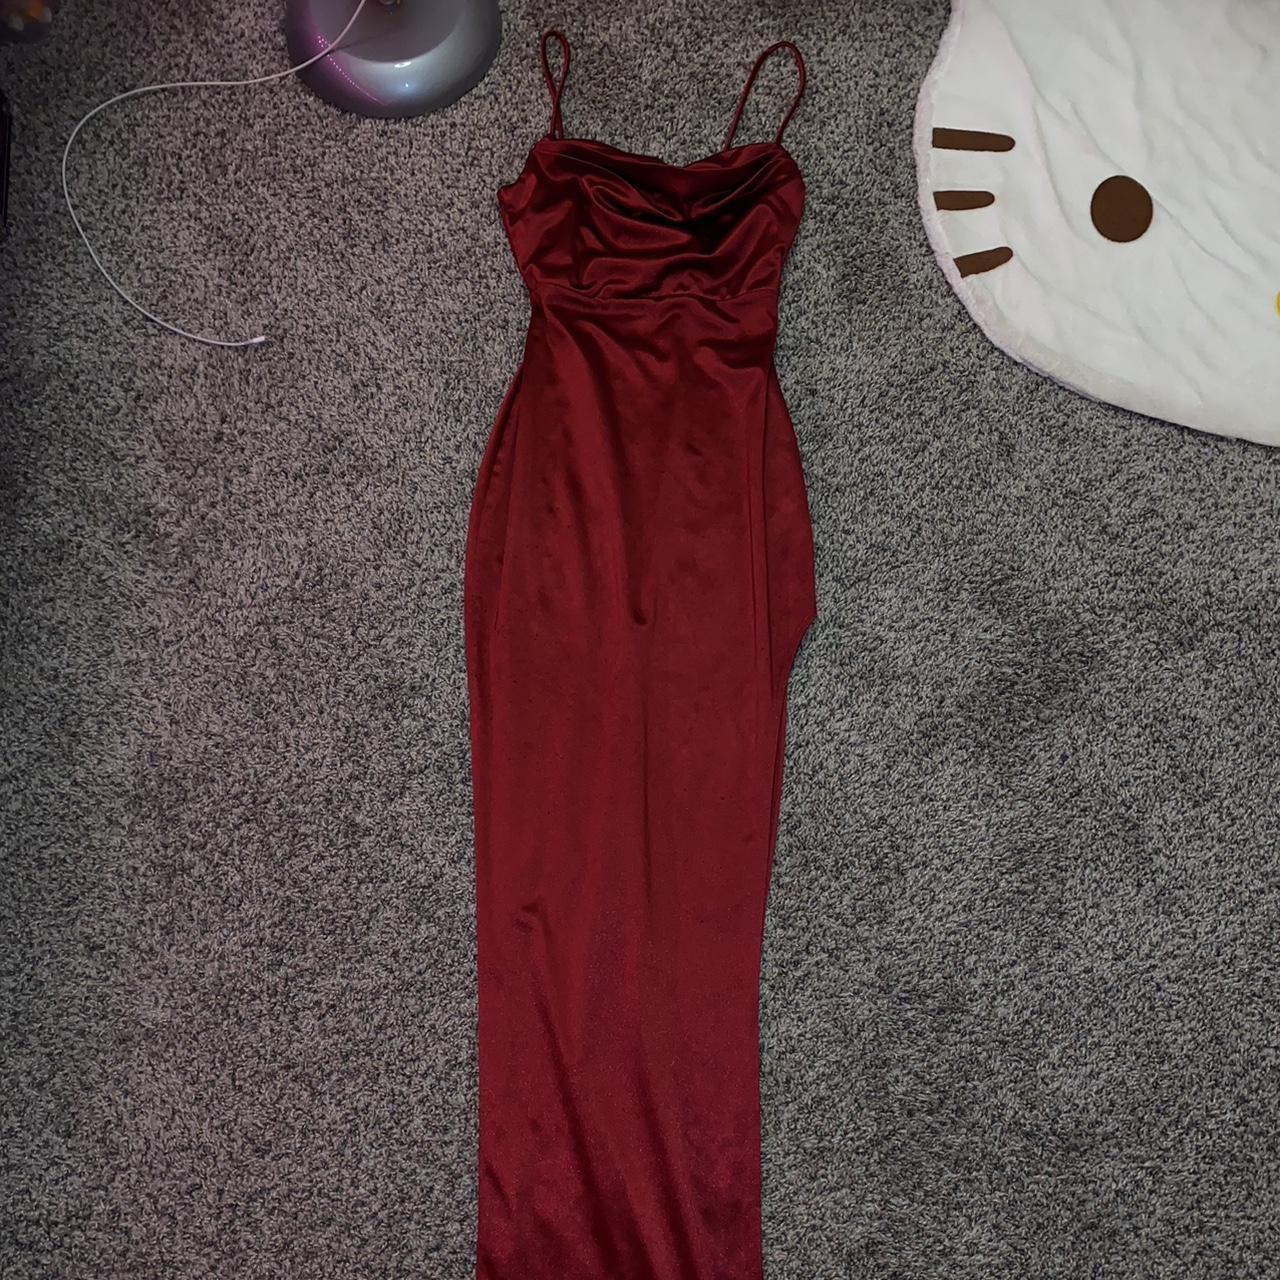 Women's Red Dress (2)